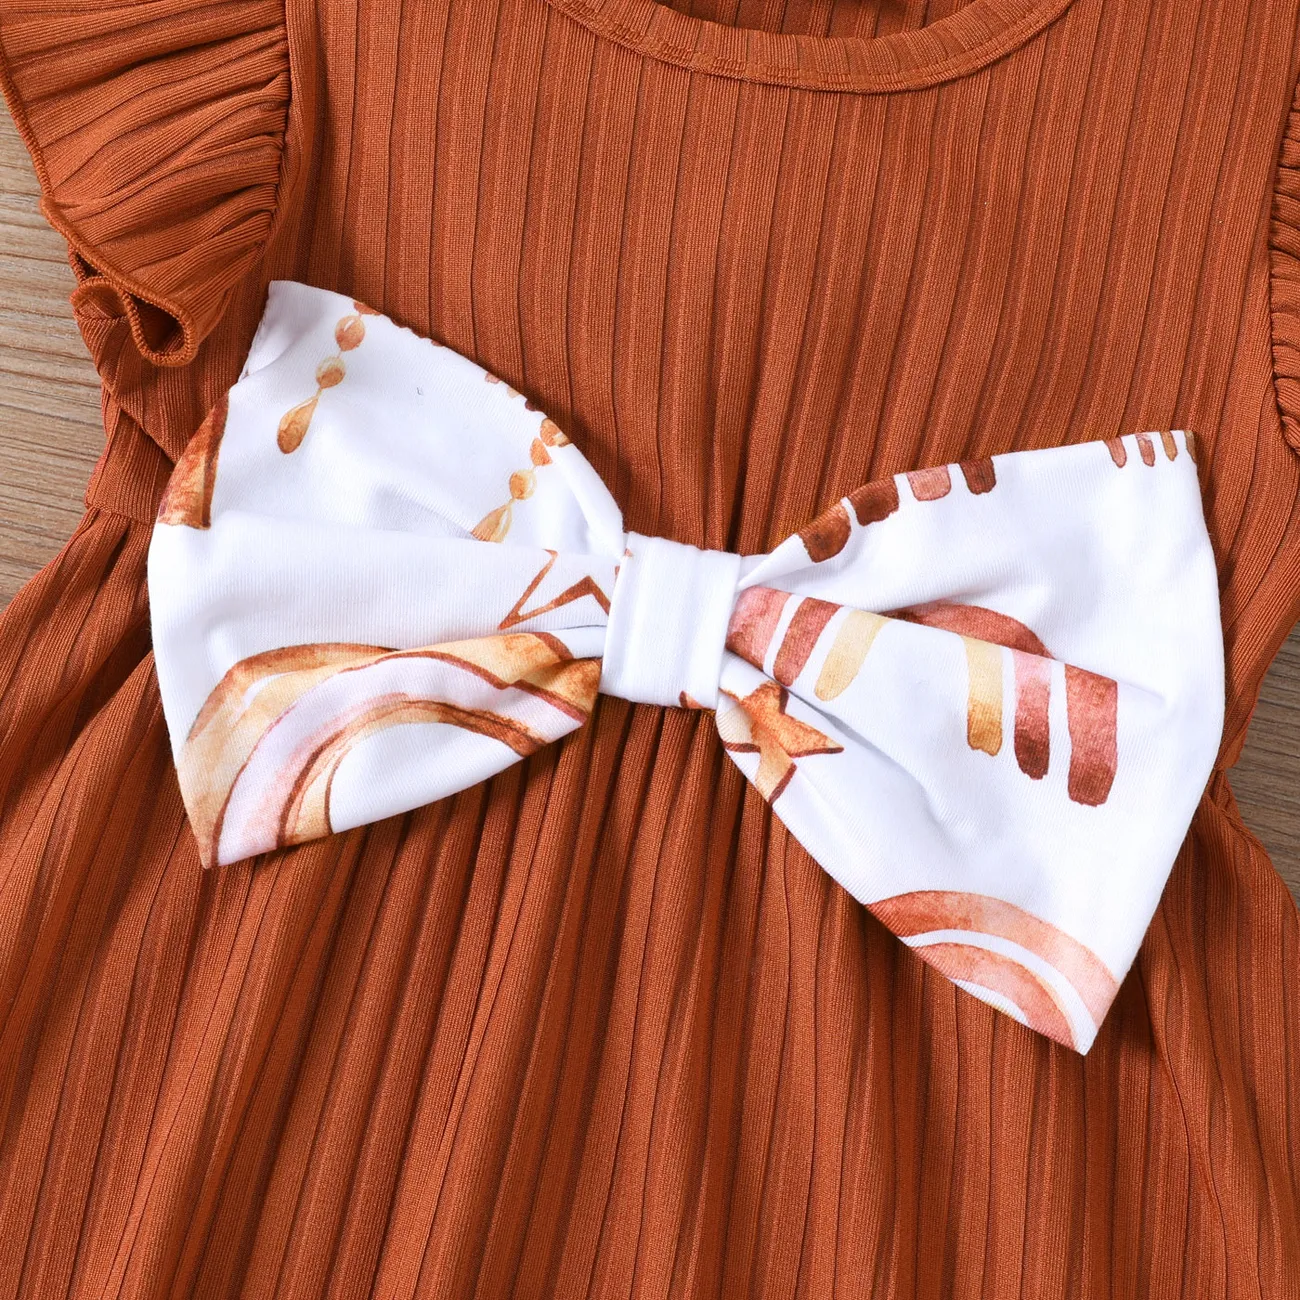 Baby Girl Rainbow&Star Print Ruffled Flutter-Sleeve Dress Brown big image 1